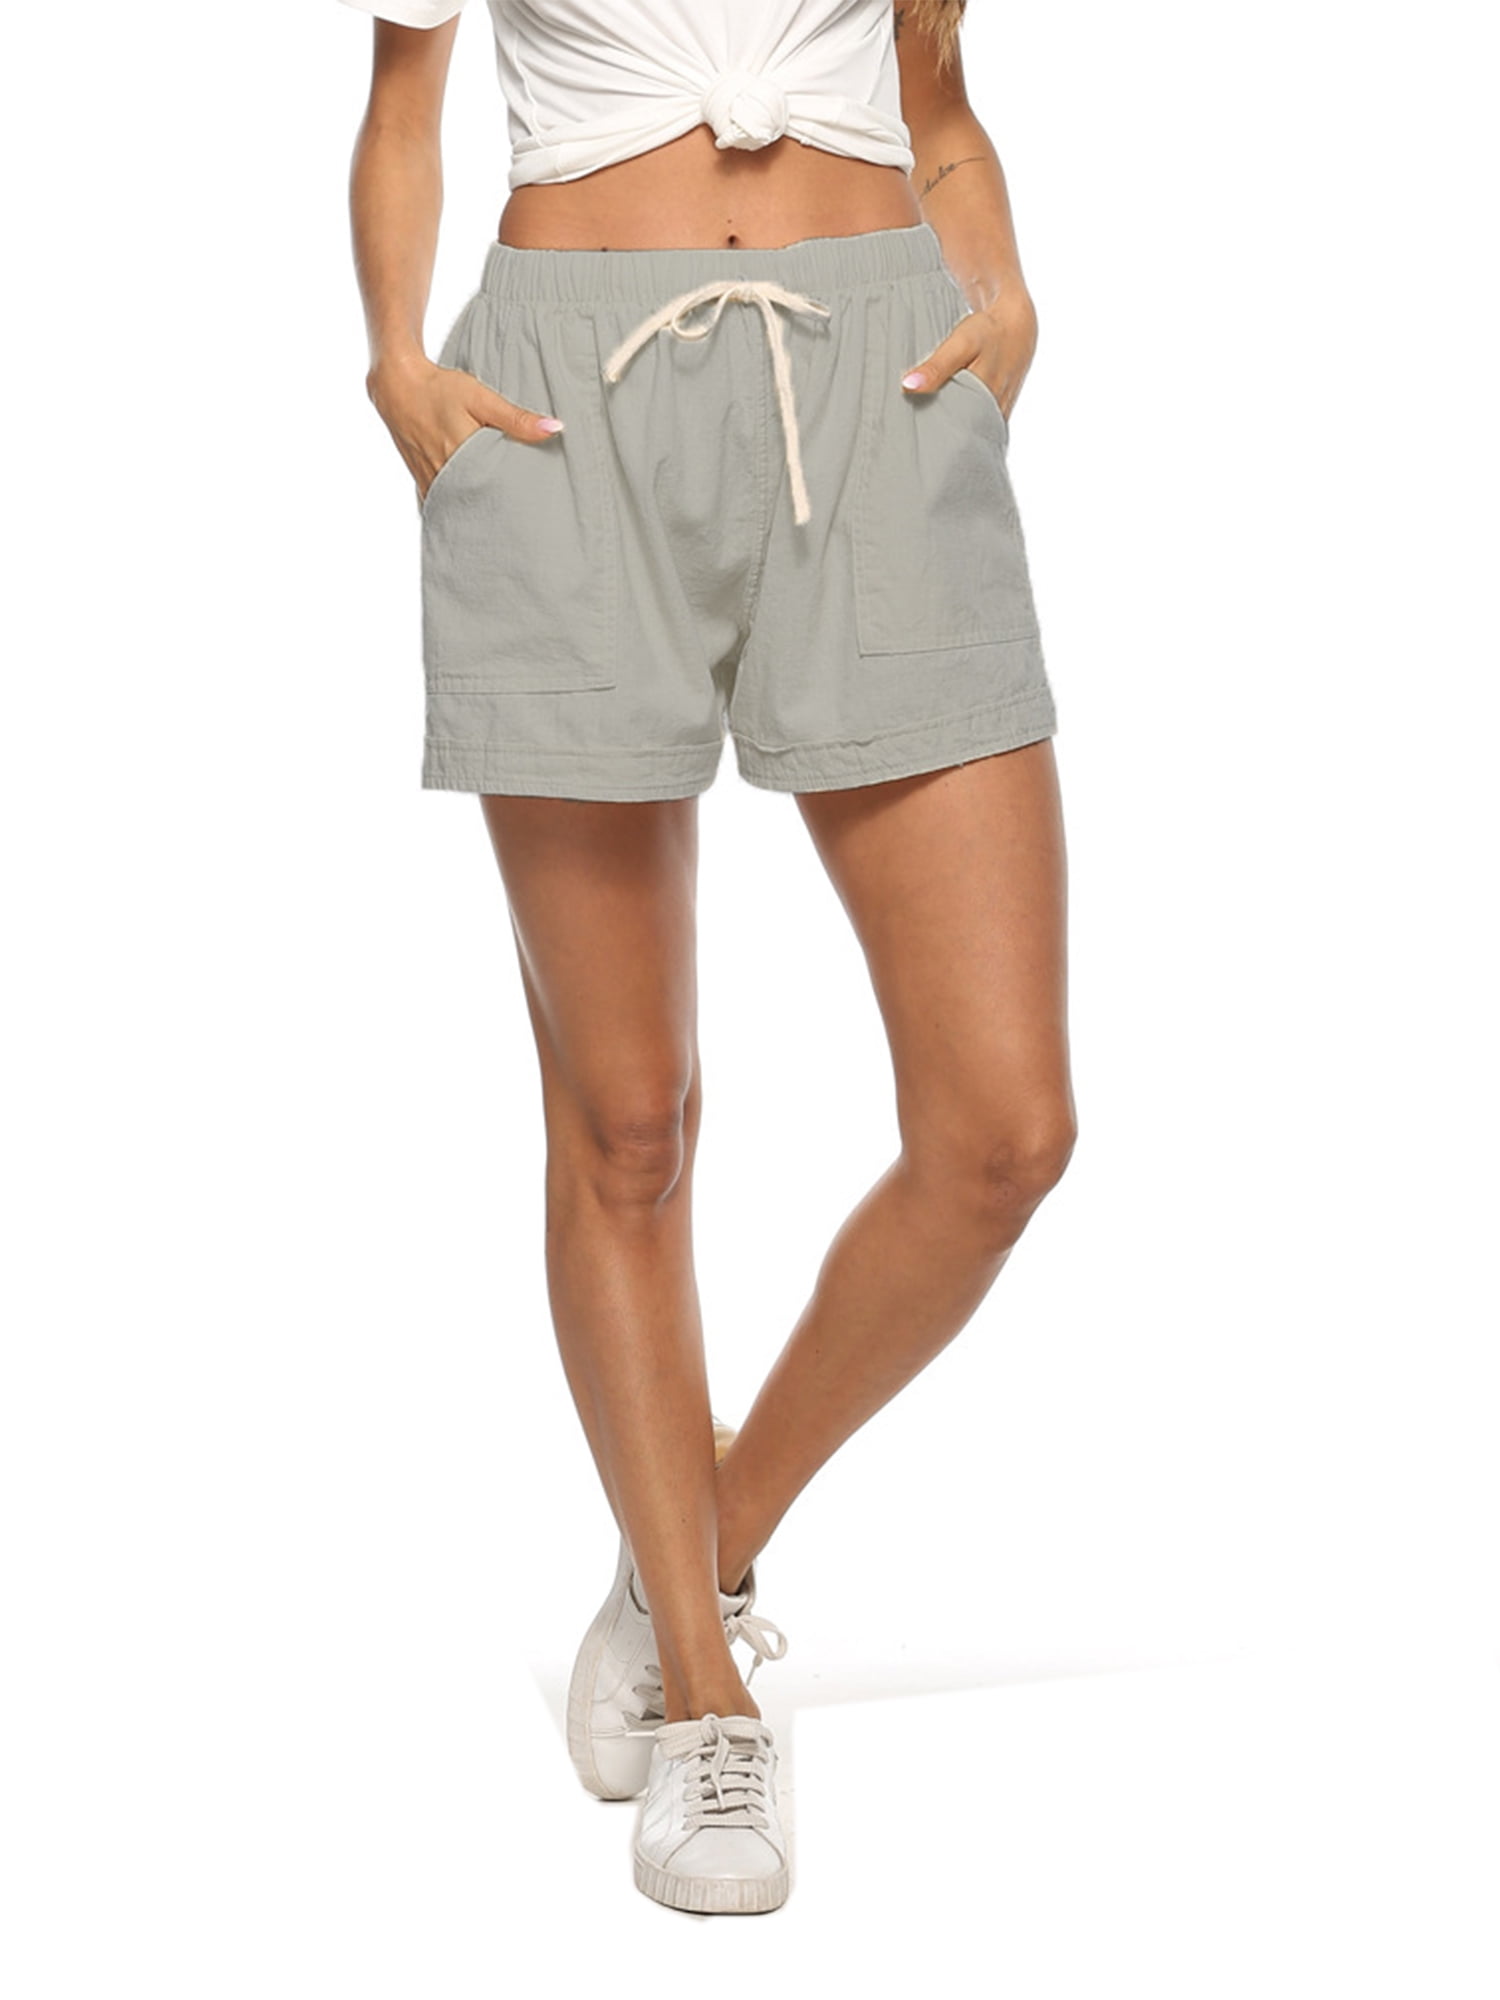 Zimaes-Women Beach 1/2 Length Patterned Camo Fit Mid-Waist Jeans Denim Shorts 